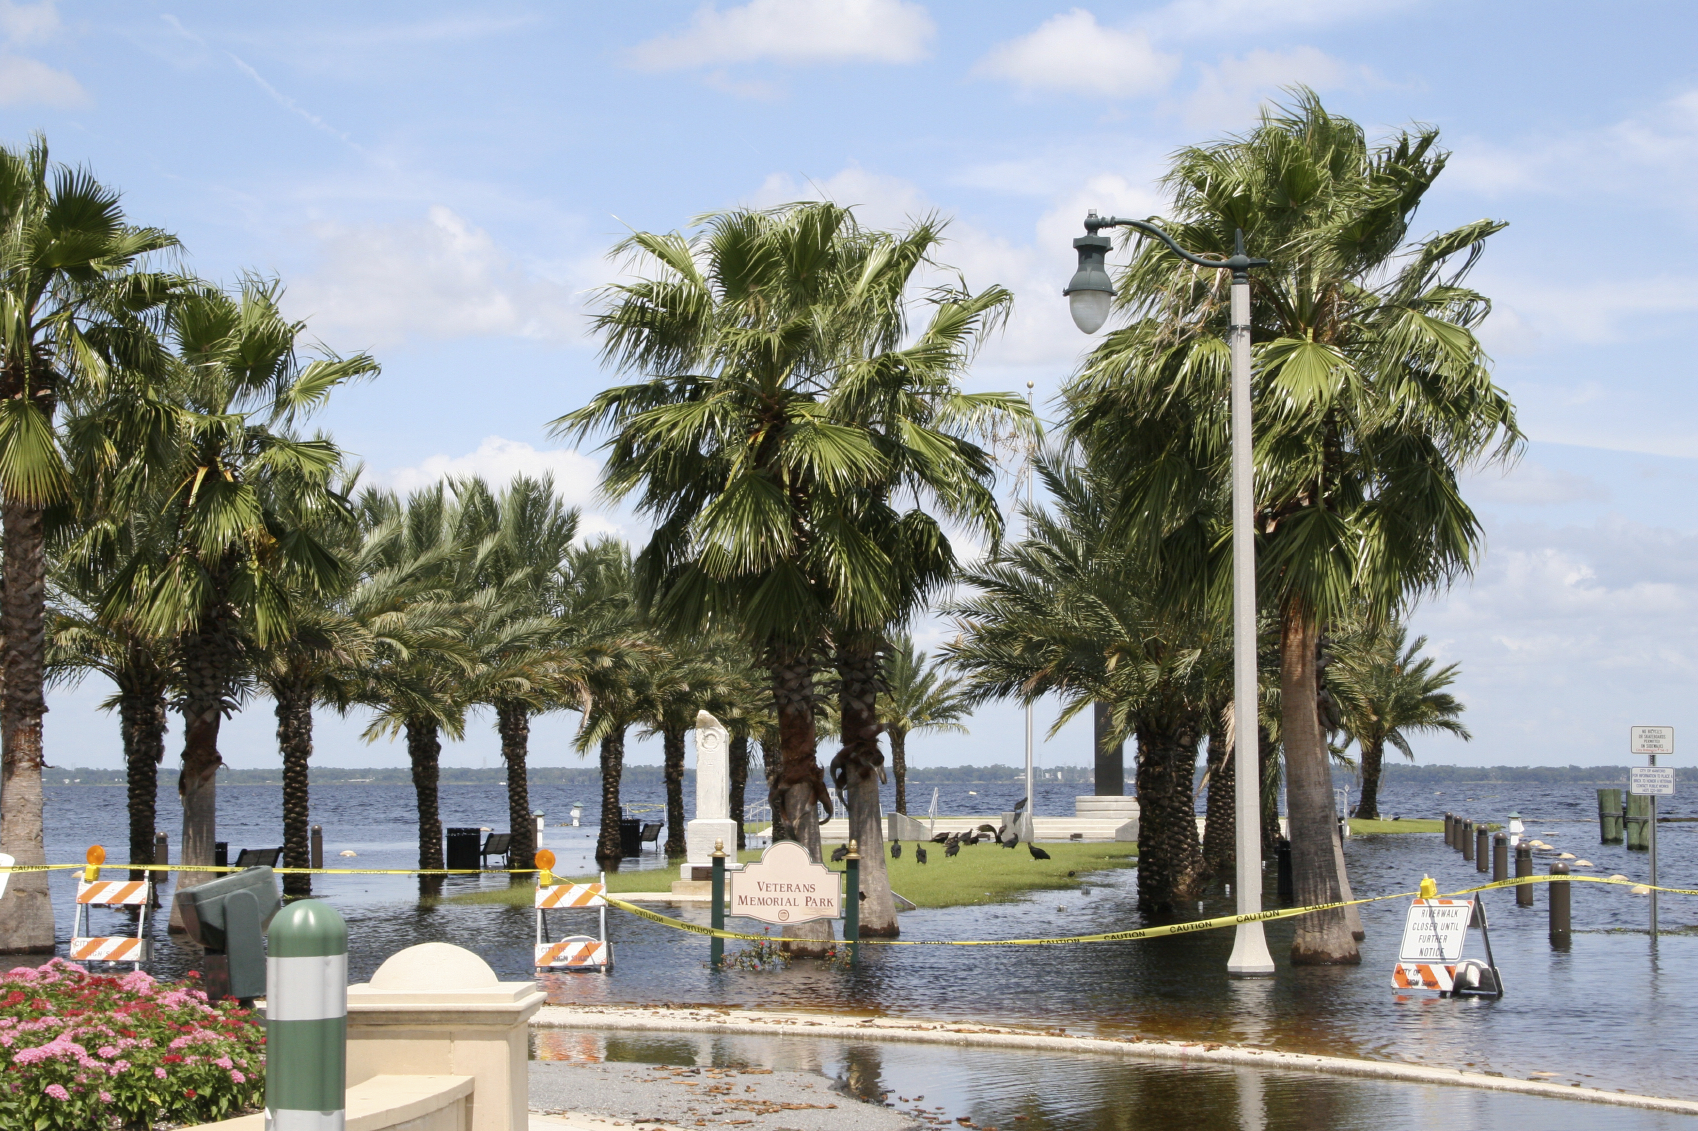 Florida coastal flooding